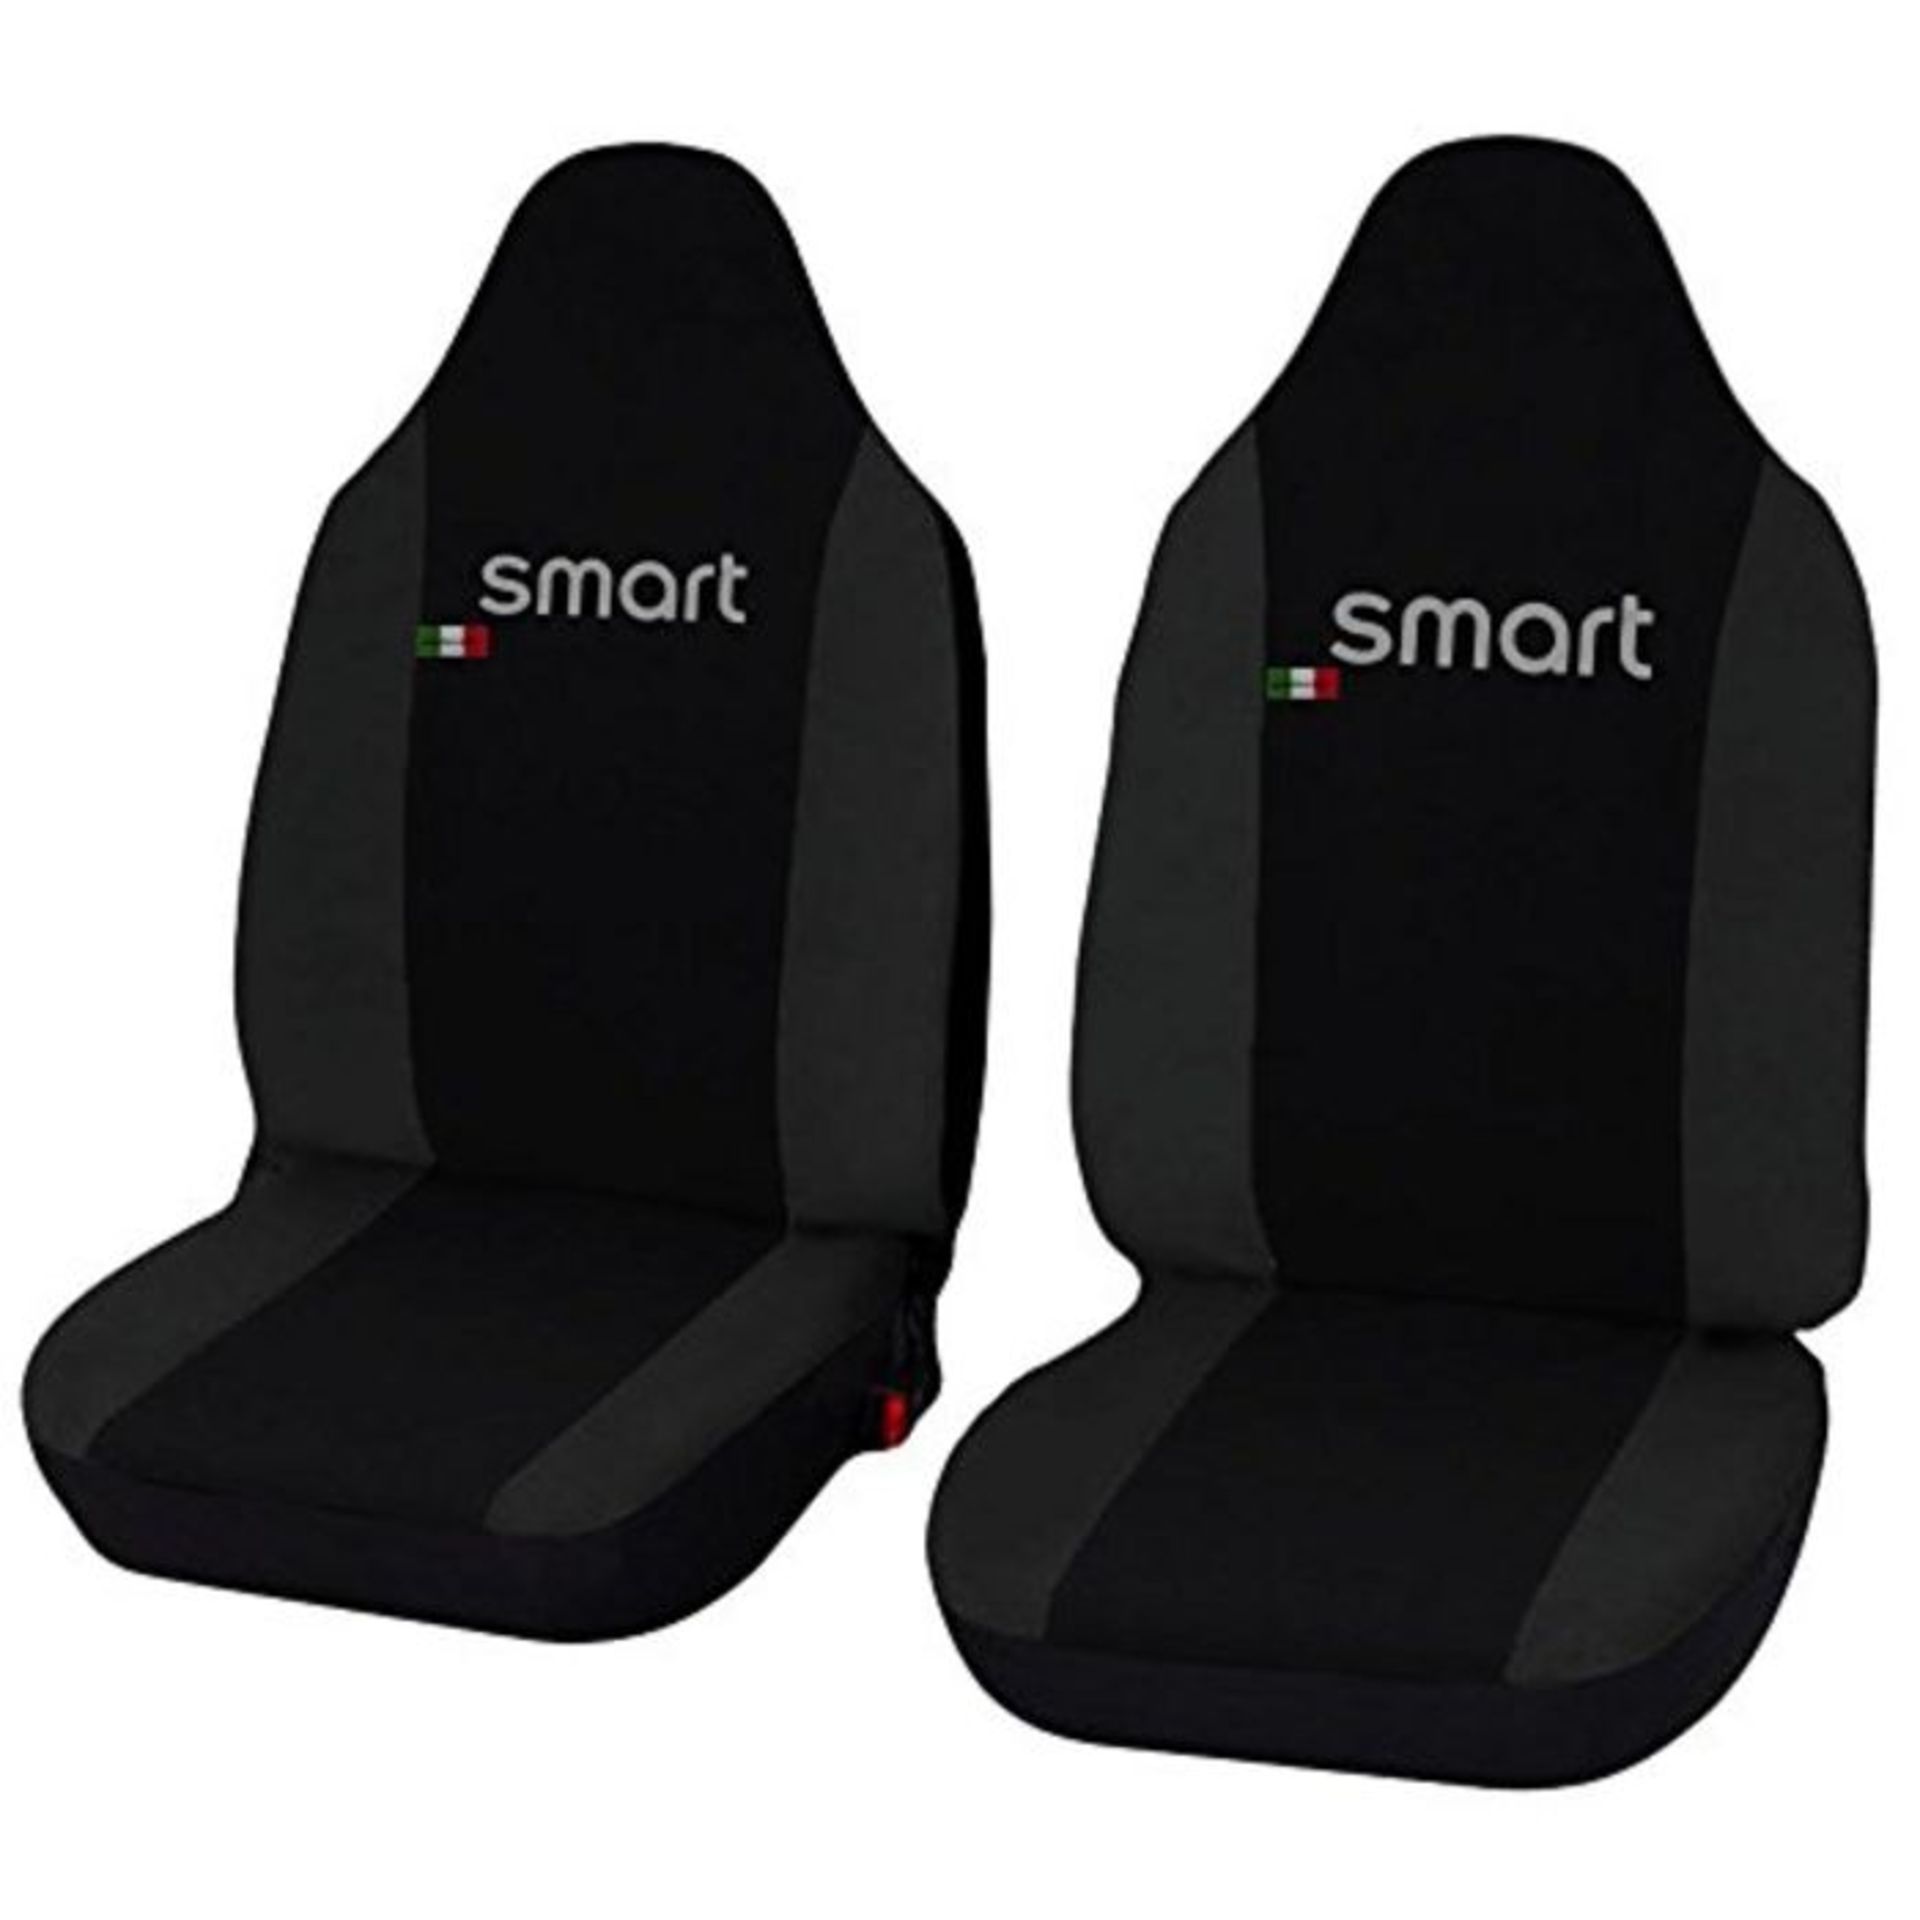 Lupex Shop Smart.3s_N.Gs Car Seat Cover, Black/Dark Grey